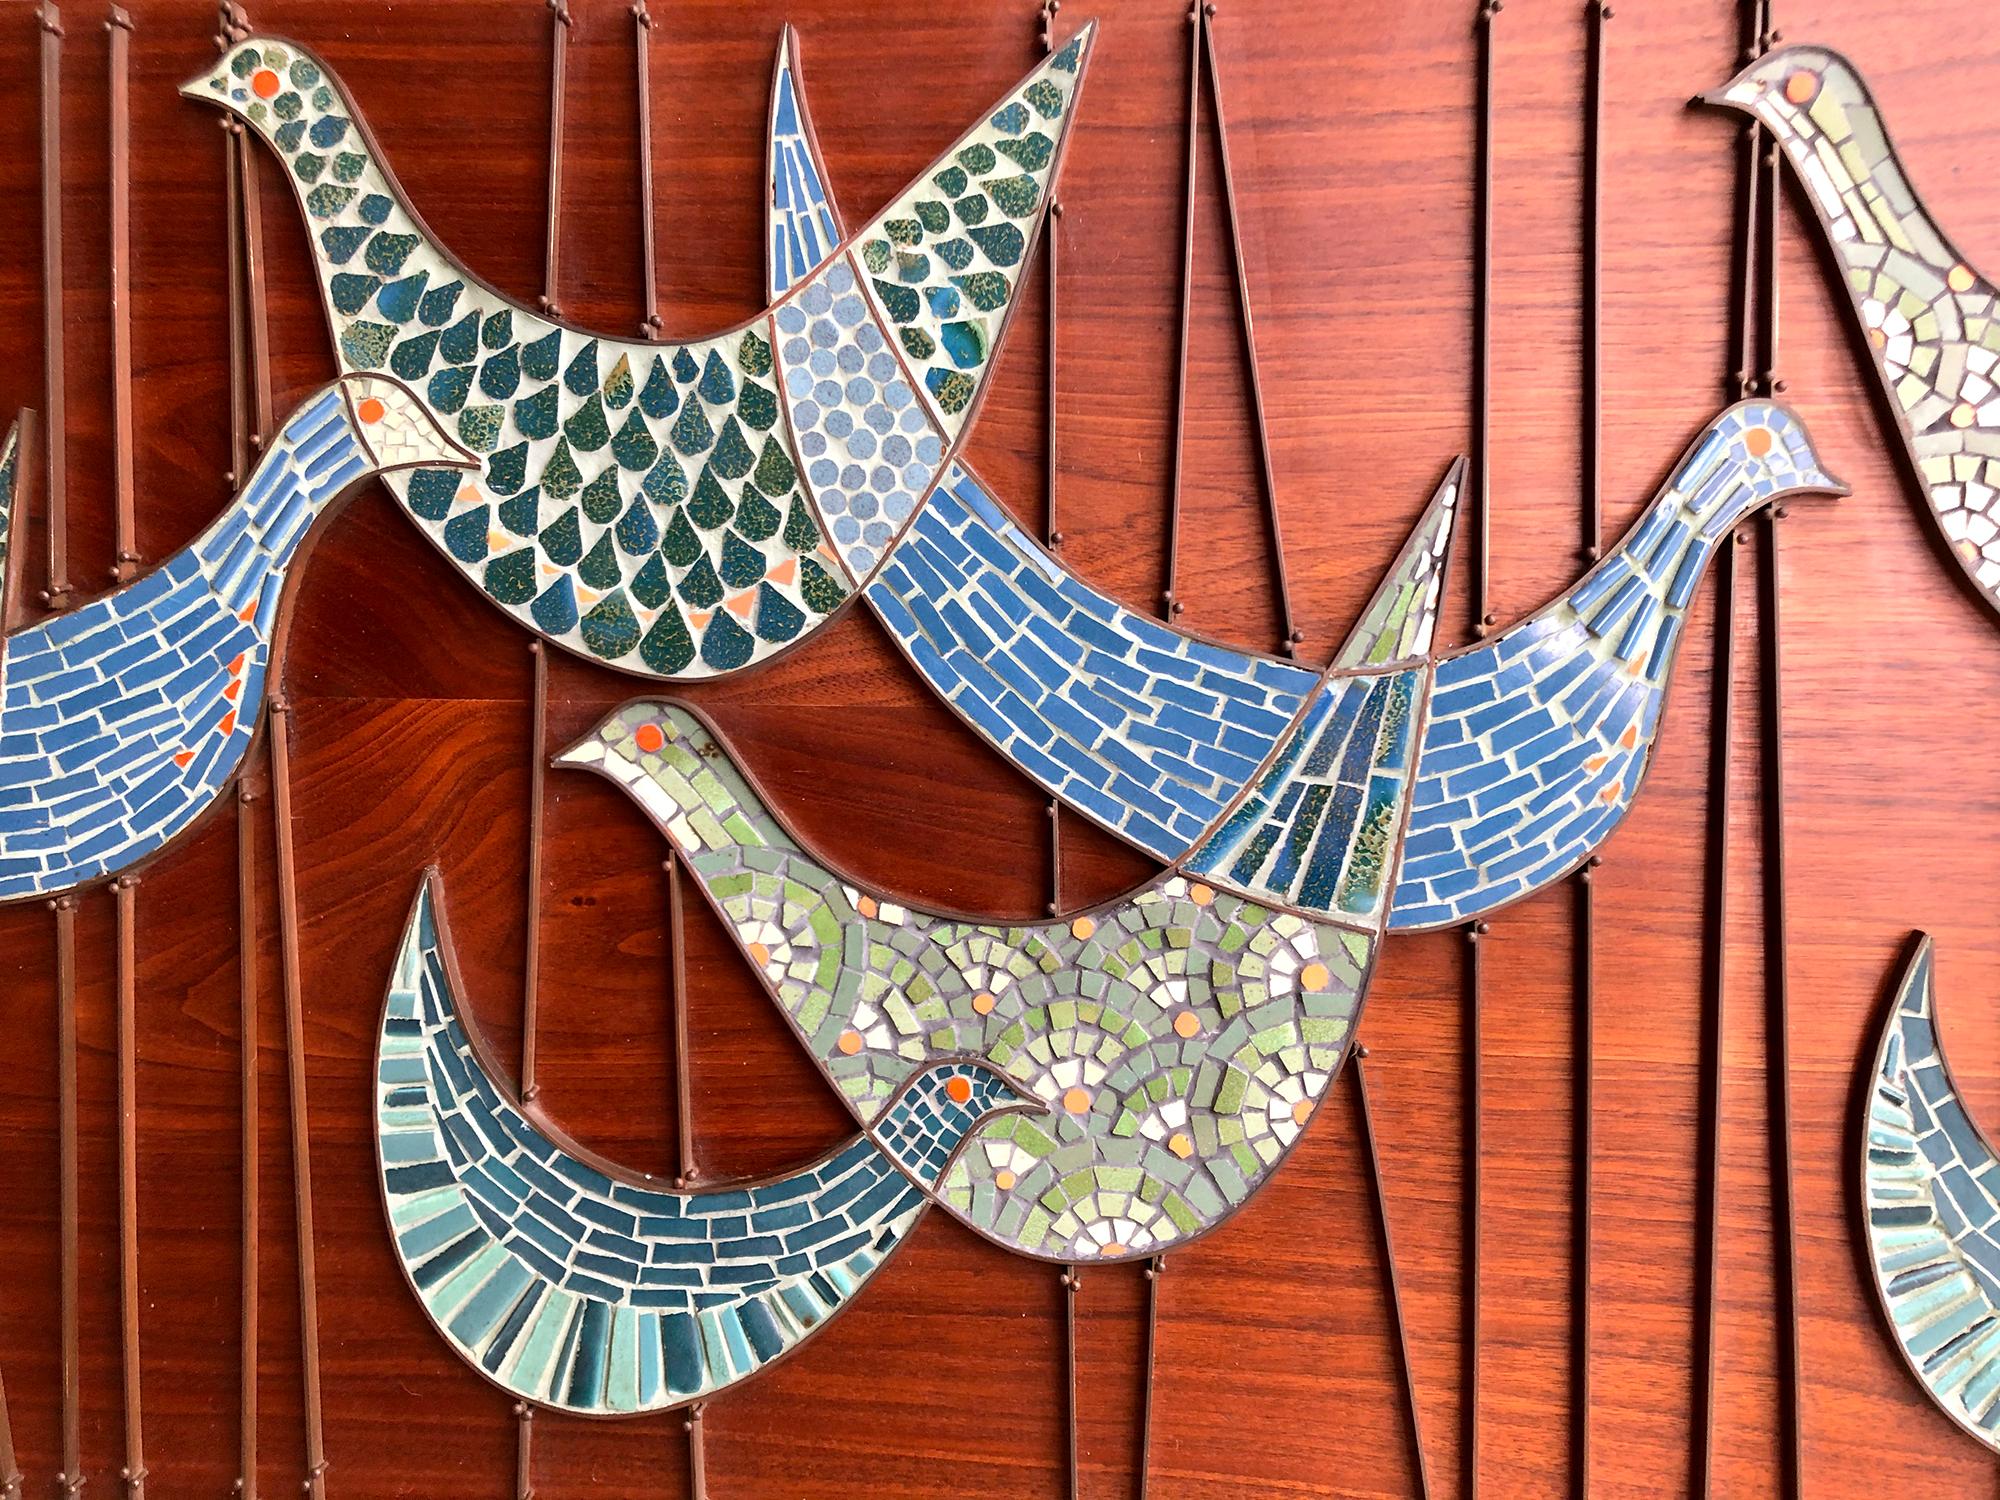 Ceramic modernist bird mosaic with intricate brass design wall hanging, circa 1960s. Panel measures 18